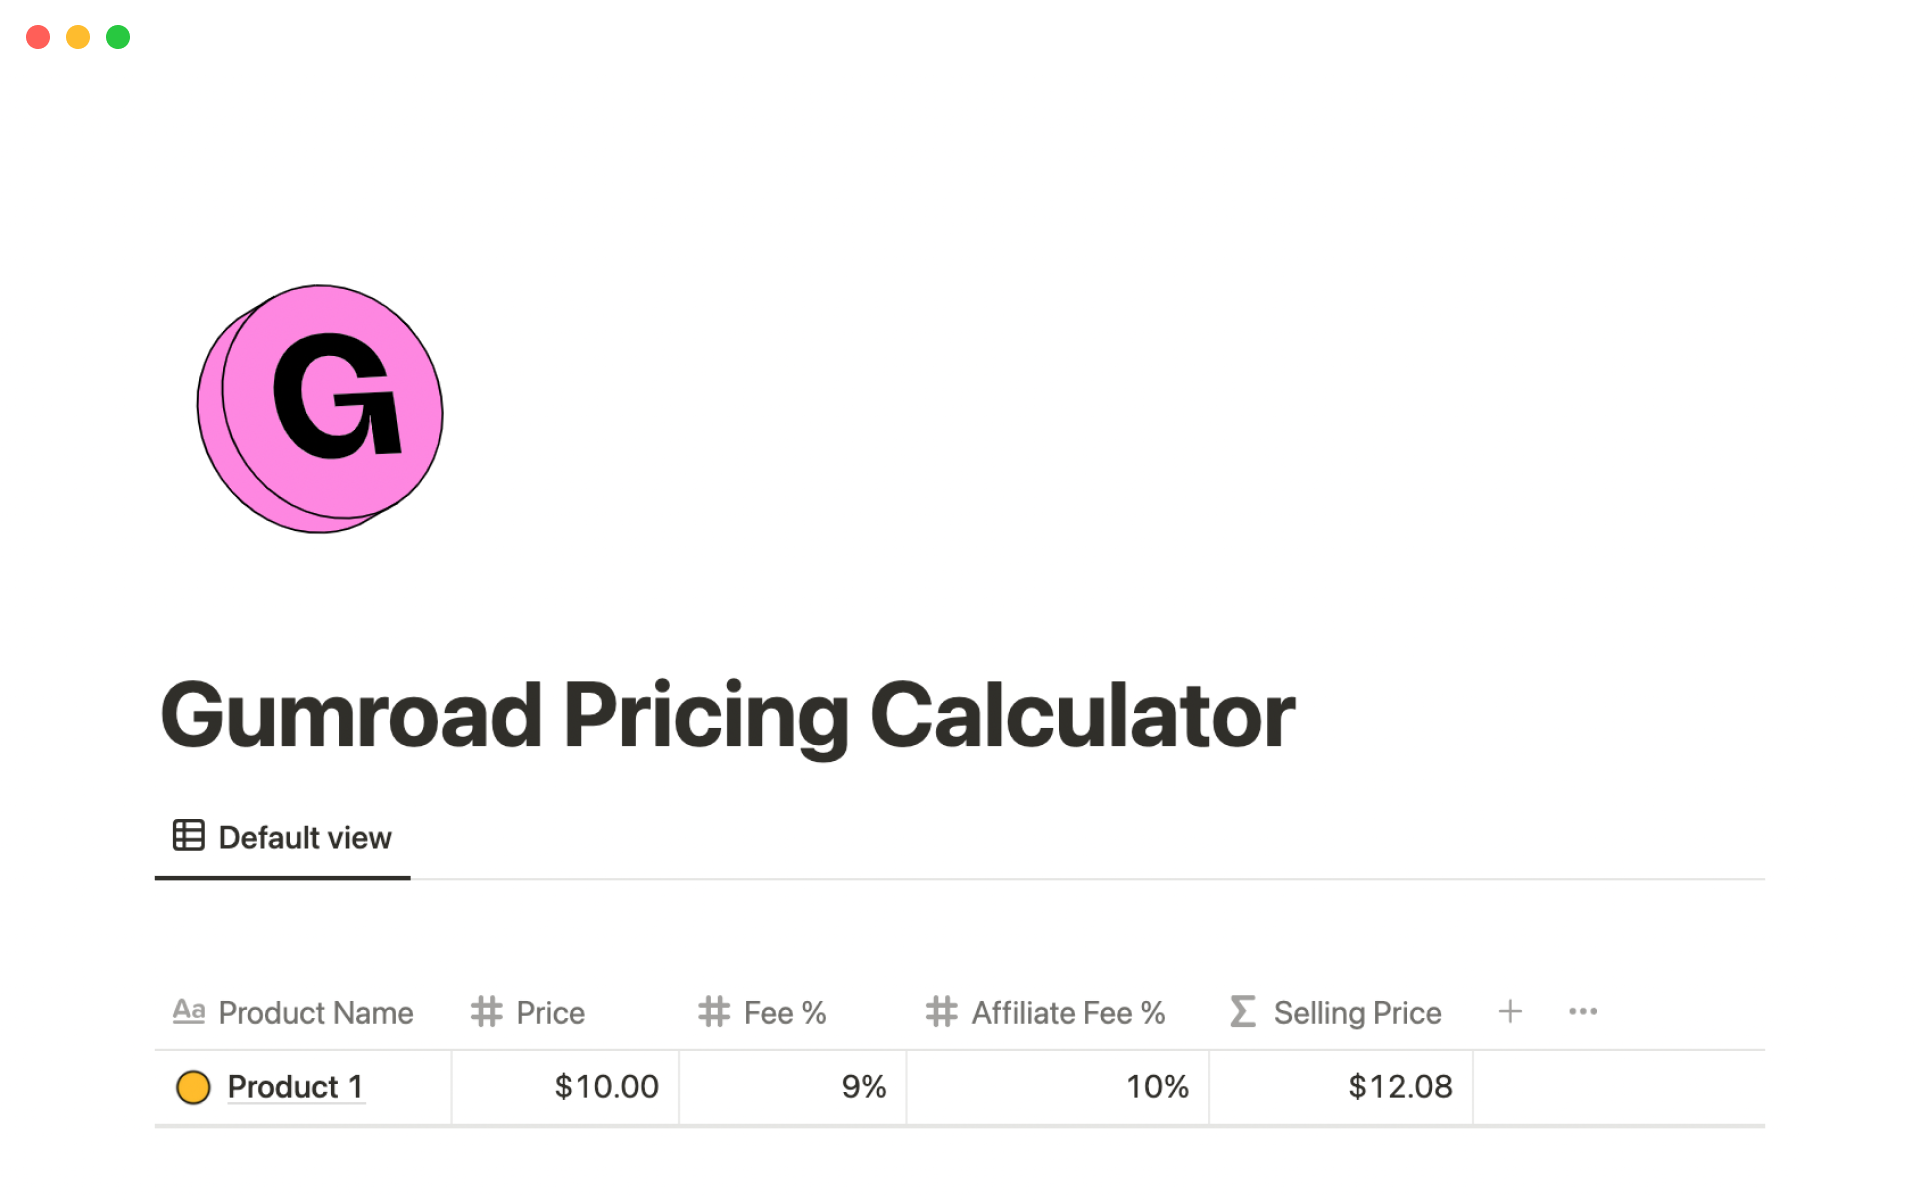 Vista previa de plantilla para Gumroad pricing calculator